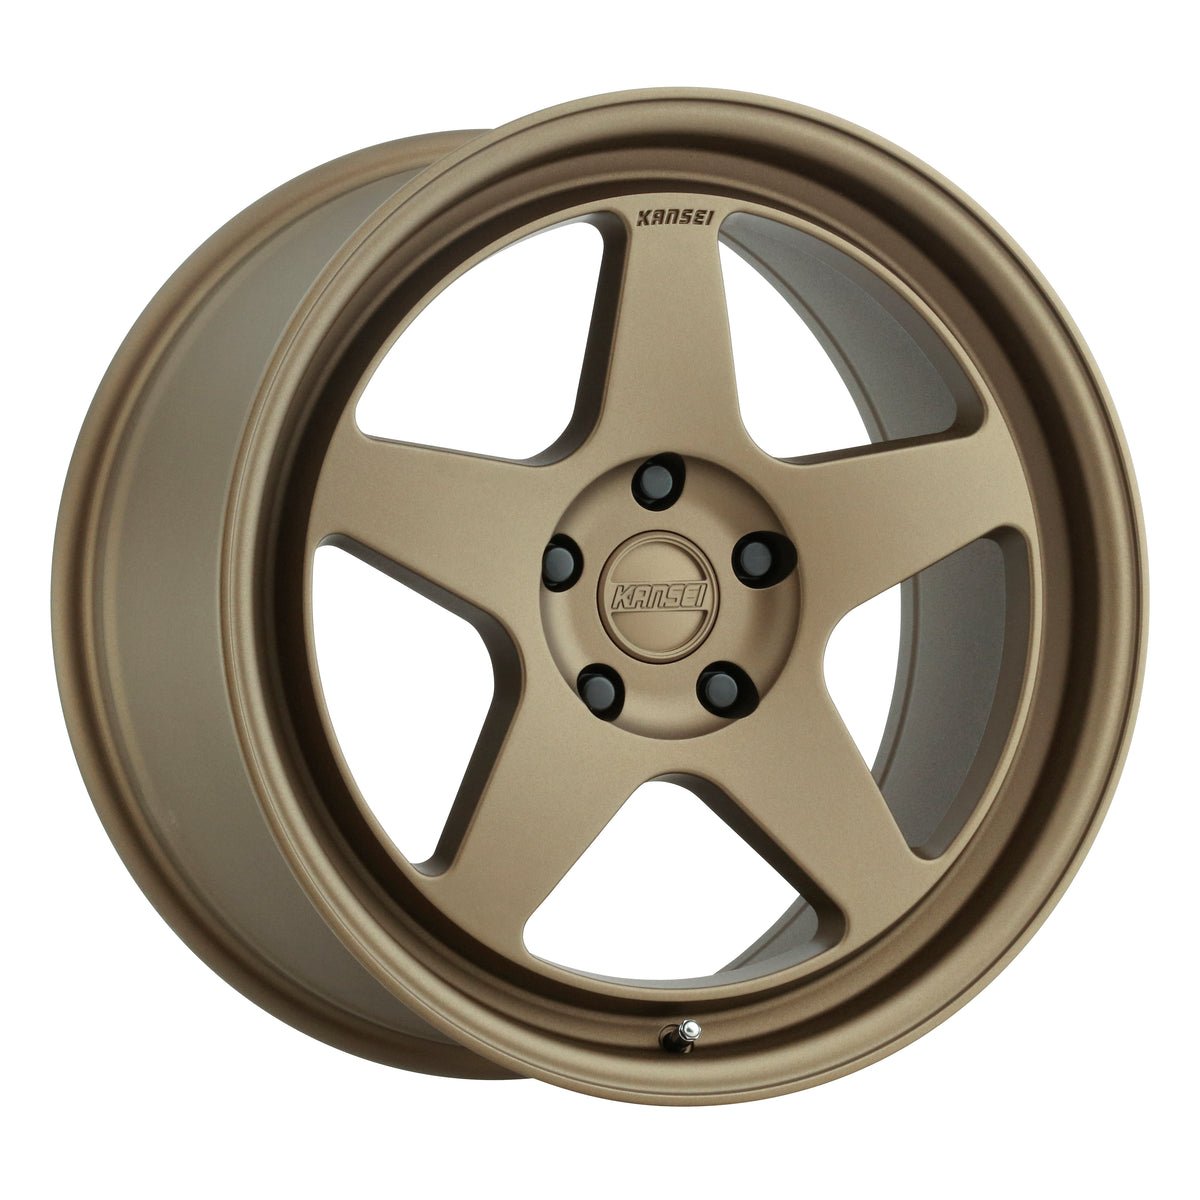 K12B KNP Wheel, Size: 18" x 8.50", Bolt Pattern: 5 x 120 mm, Backspace: 6.13" [Finish: Bronze]